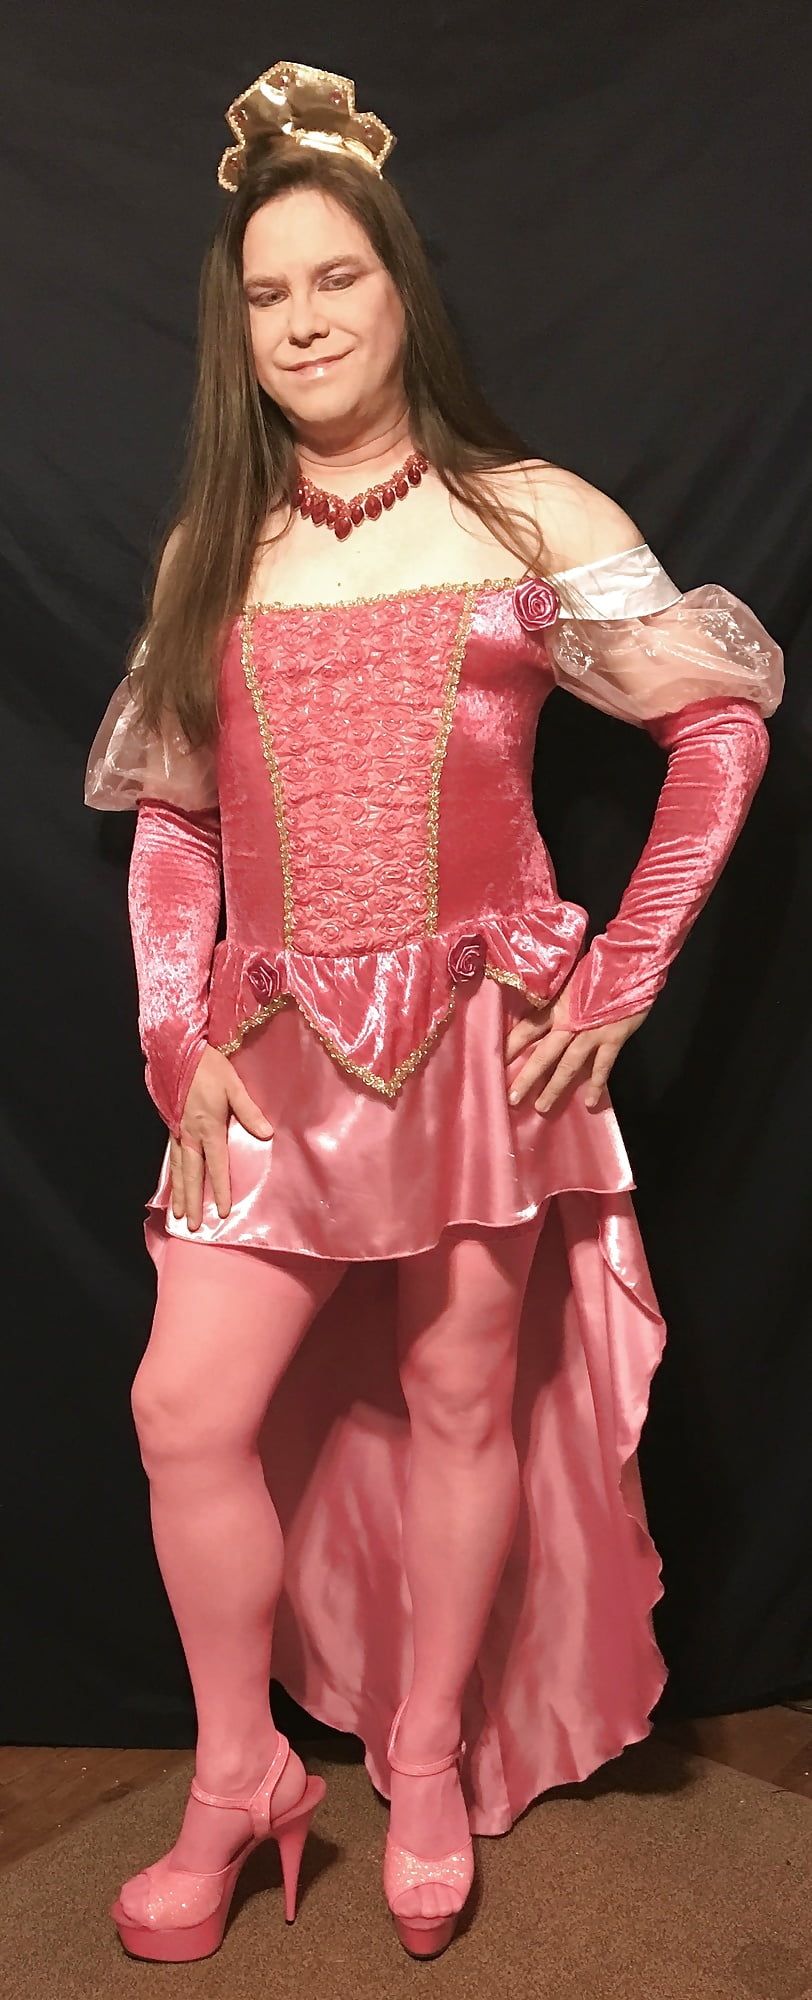 Joanie - Pink Princess #6